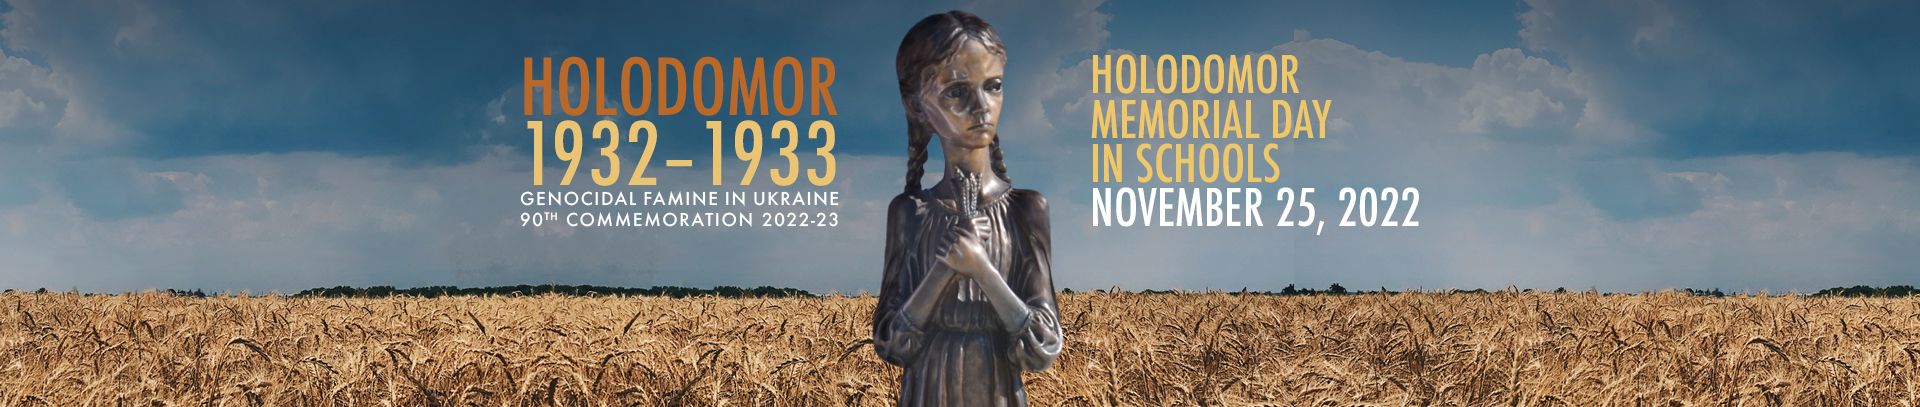 Holodomor Memorial Day 2022